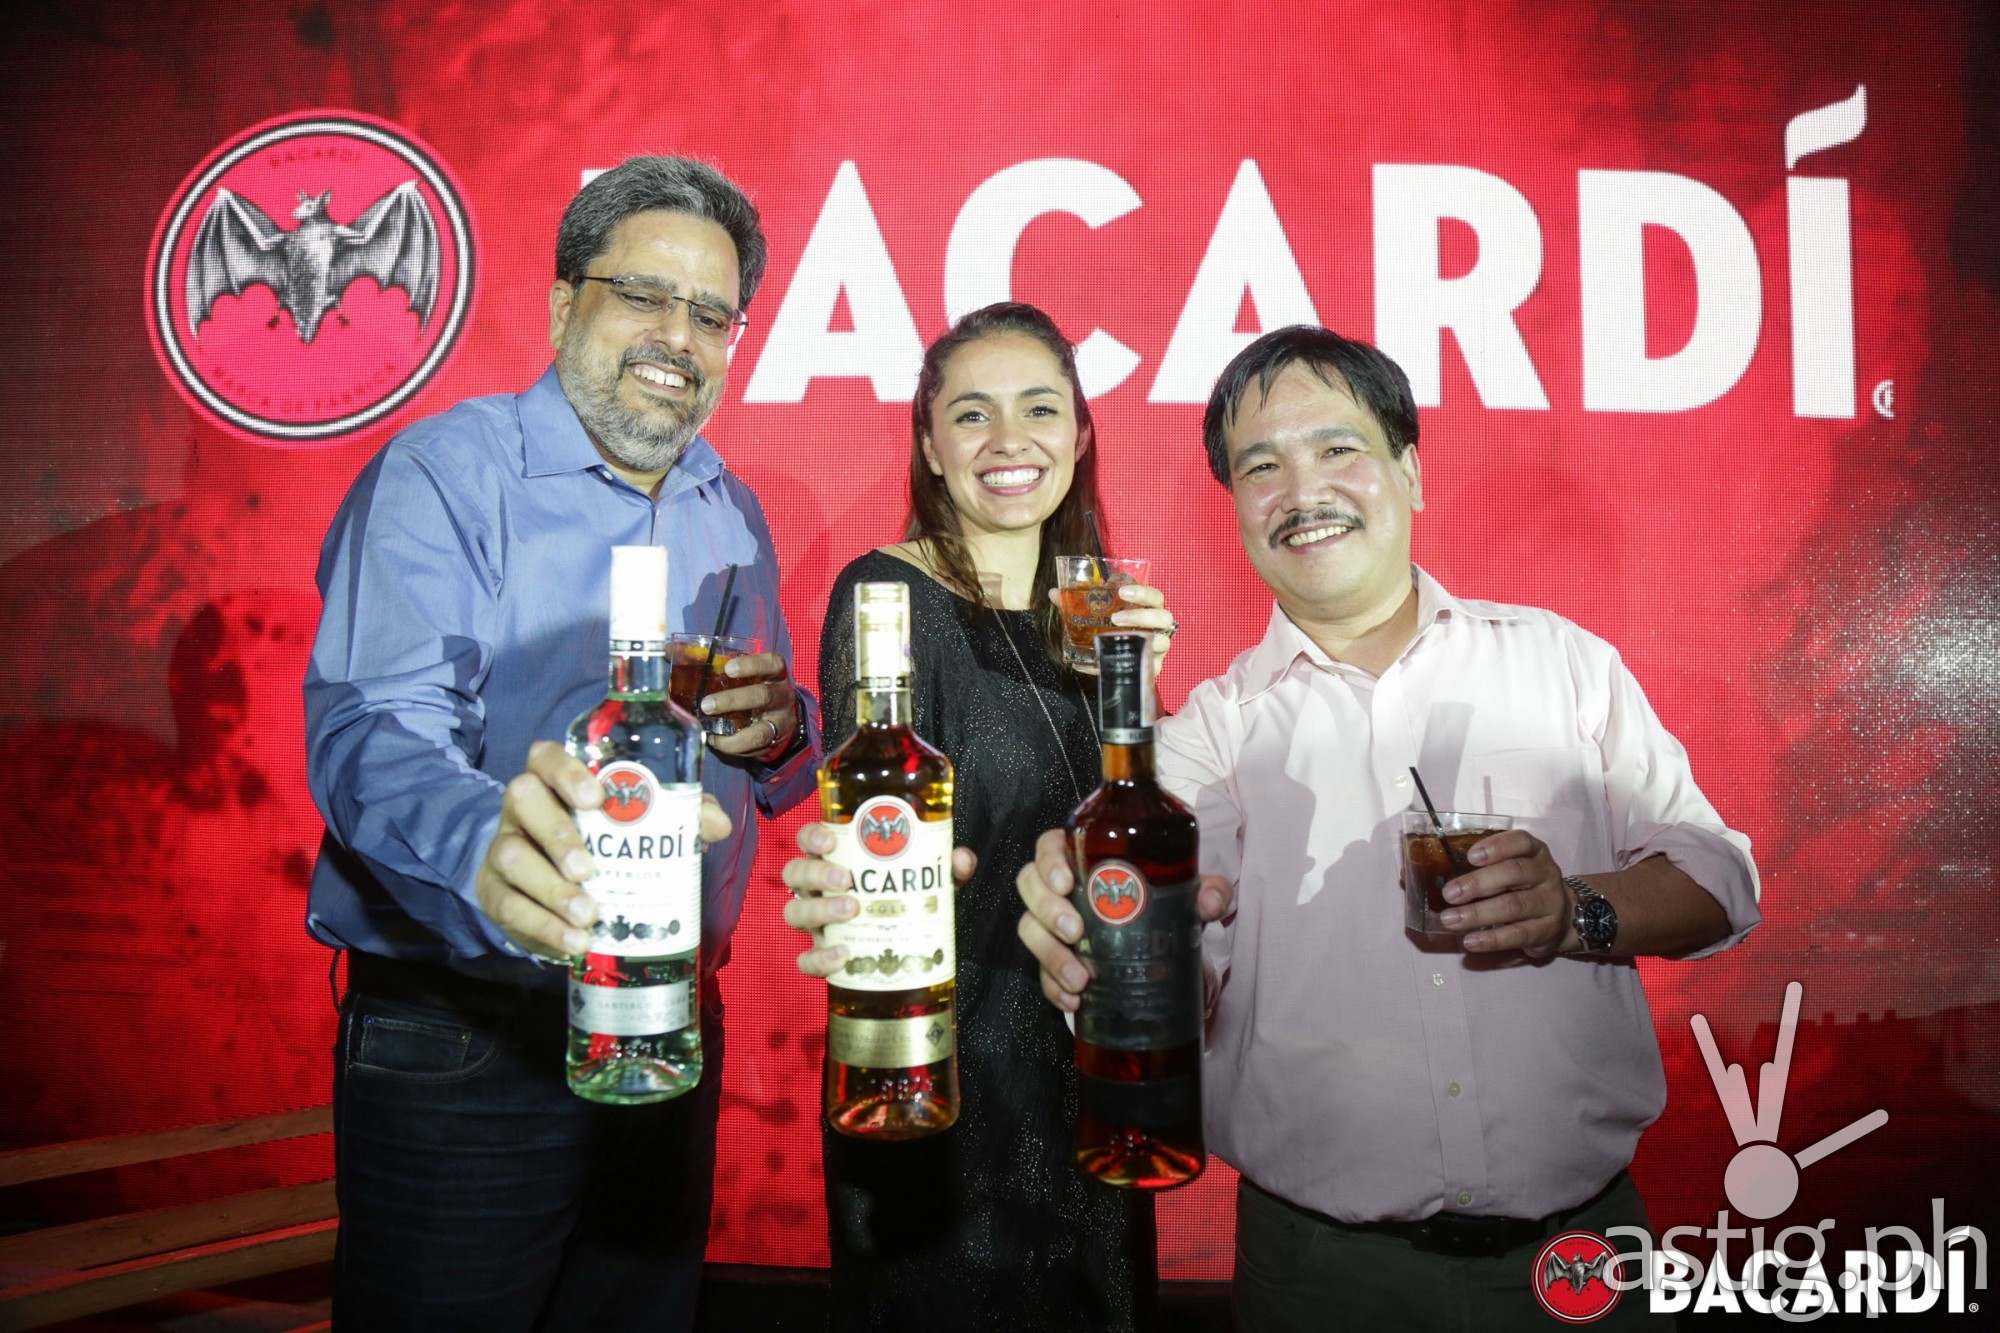 Bacardi unveils new bottle design